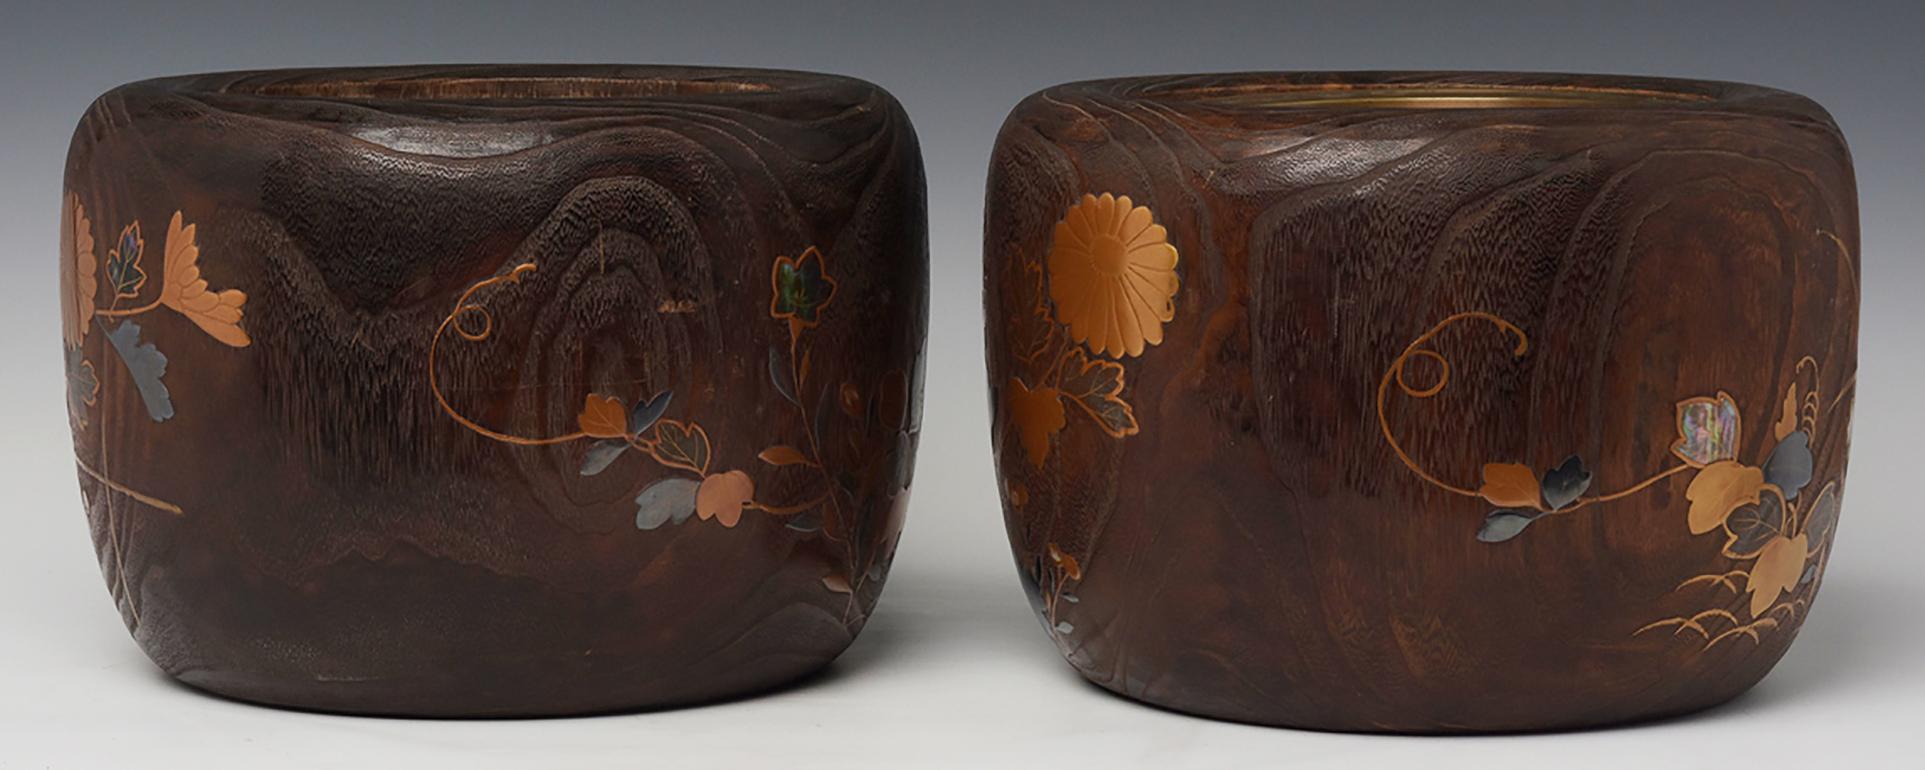 19th Century Late 19th C., Meiji, A Pair of Antique Japanese Keyaki Wooden Pots (Hibachi)